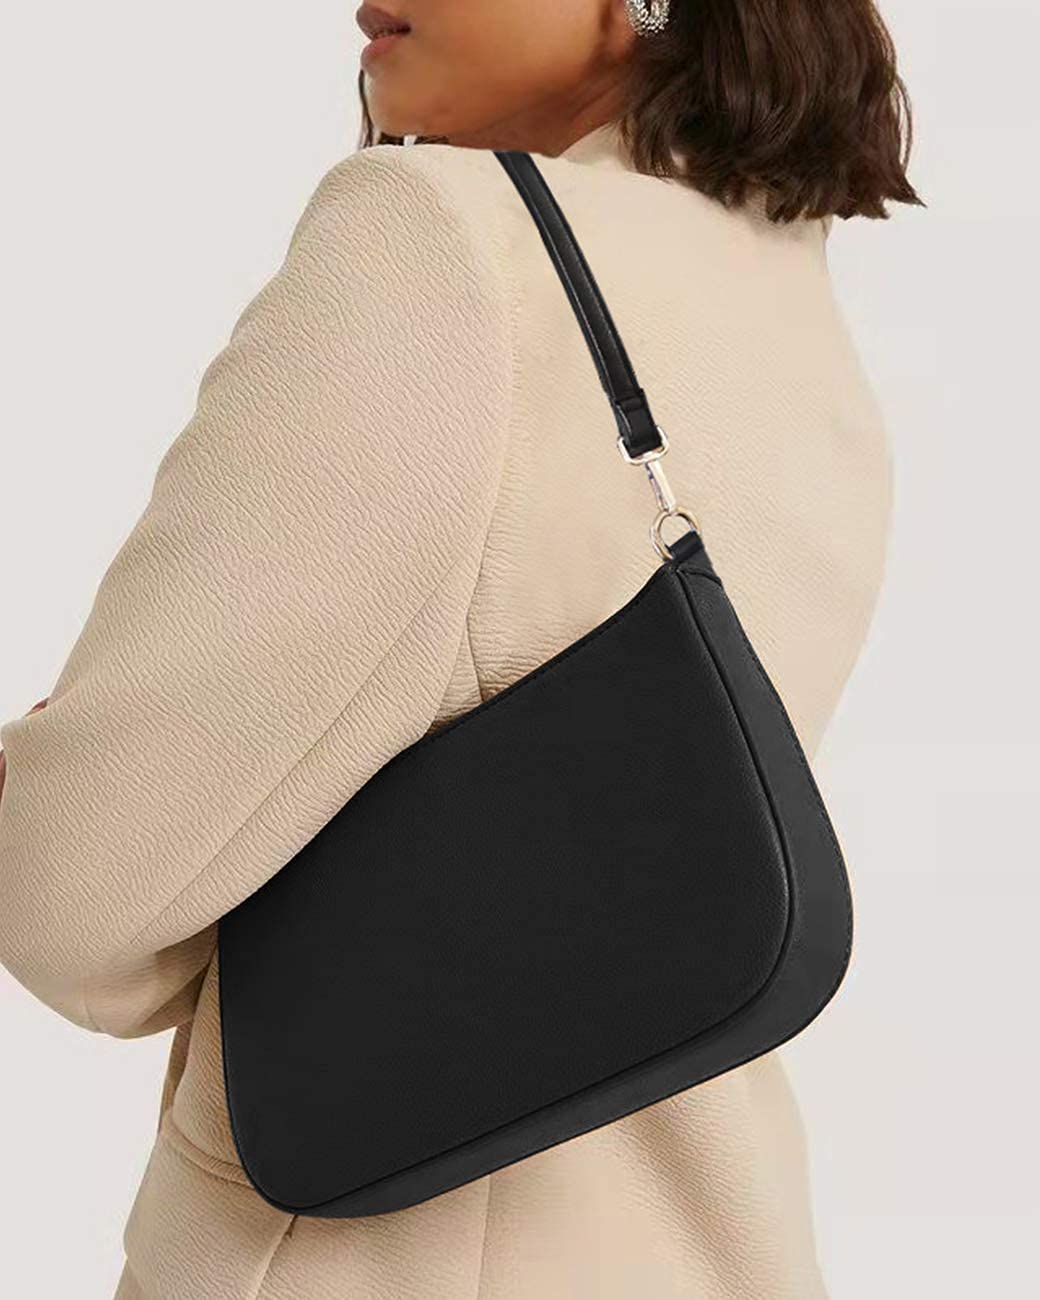 NIUEIMEE ZHOU Small Shoulder bag with 2 Removable Straps Cross Body Clutch Purse Handbag for Women